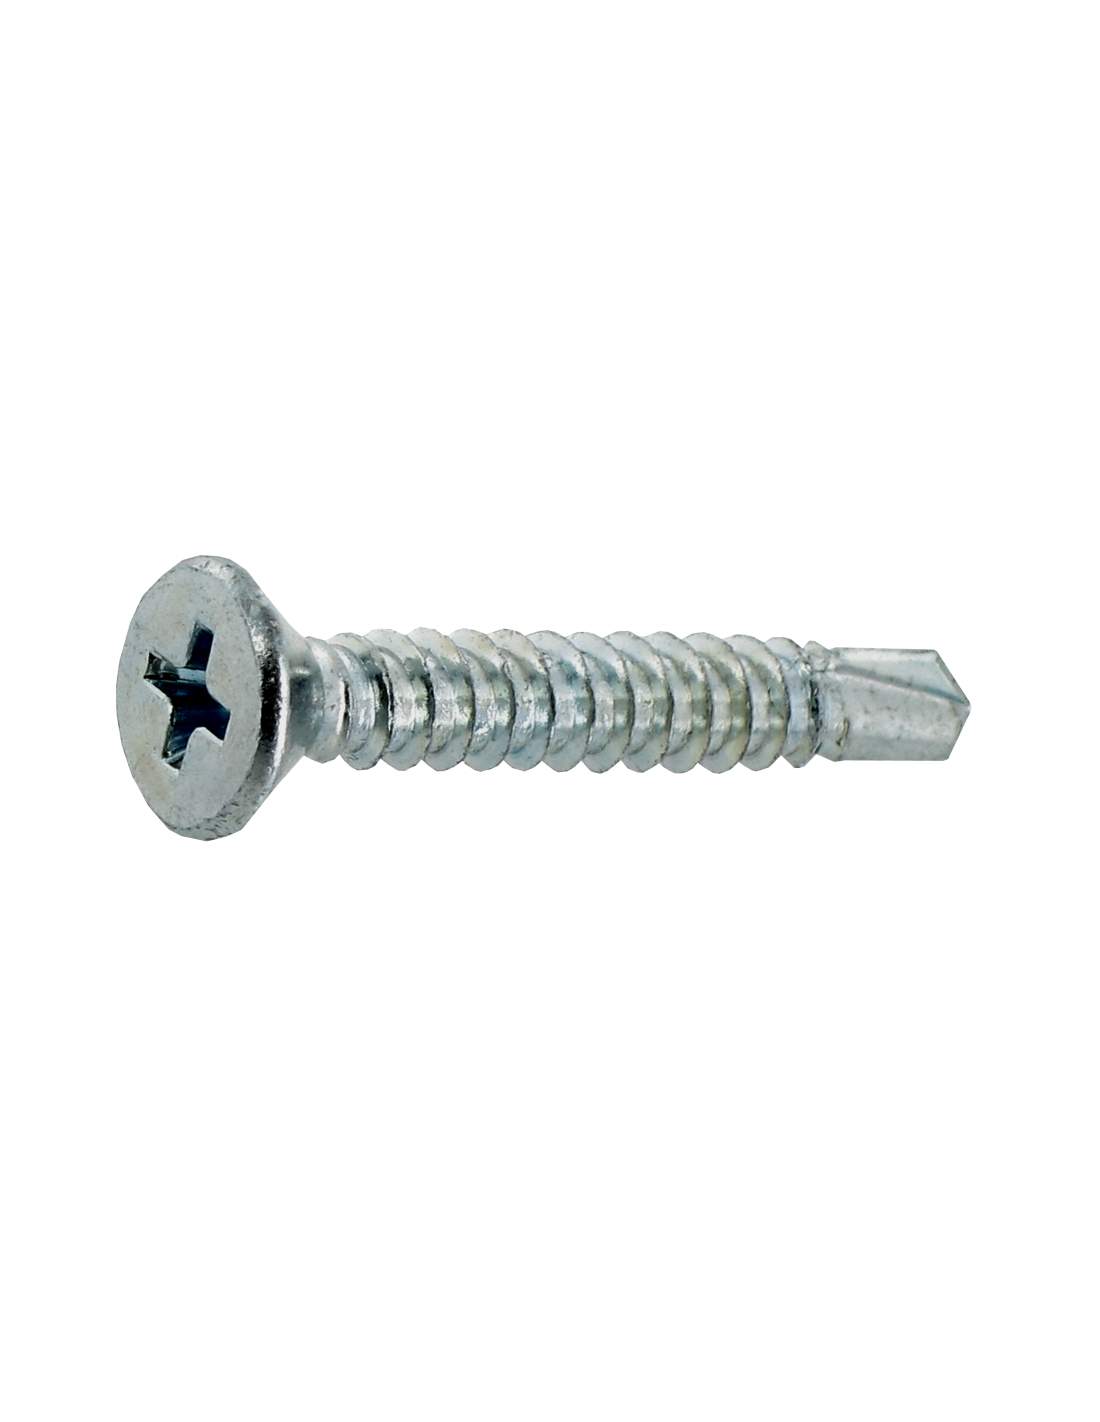 AZI 3.9x16 self-drilling countersunk-head tapping screws, 26 pcs.